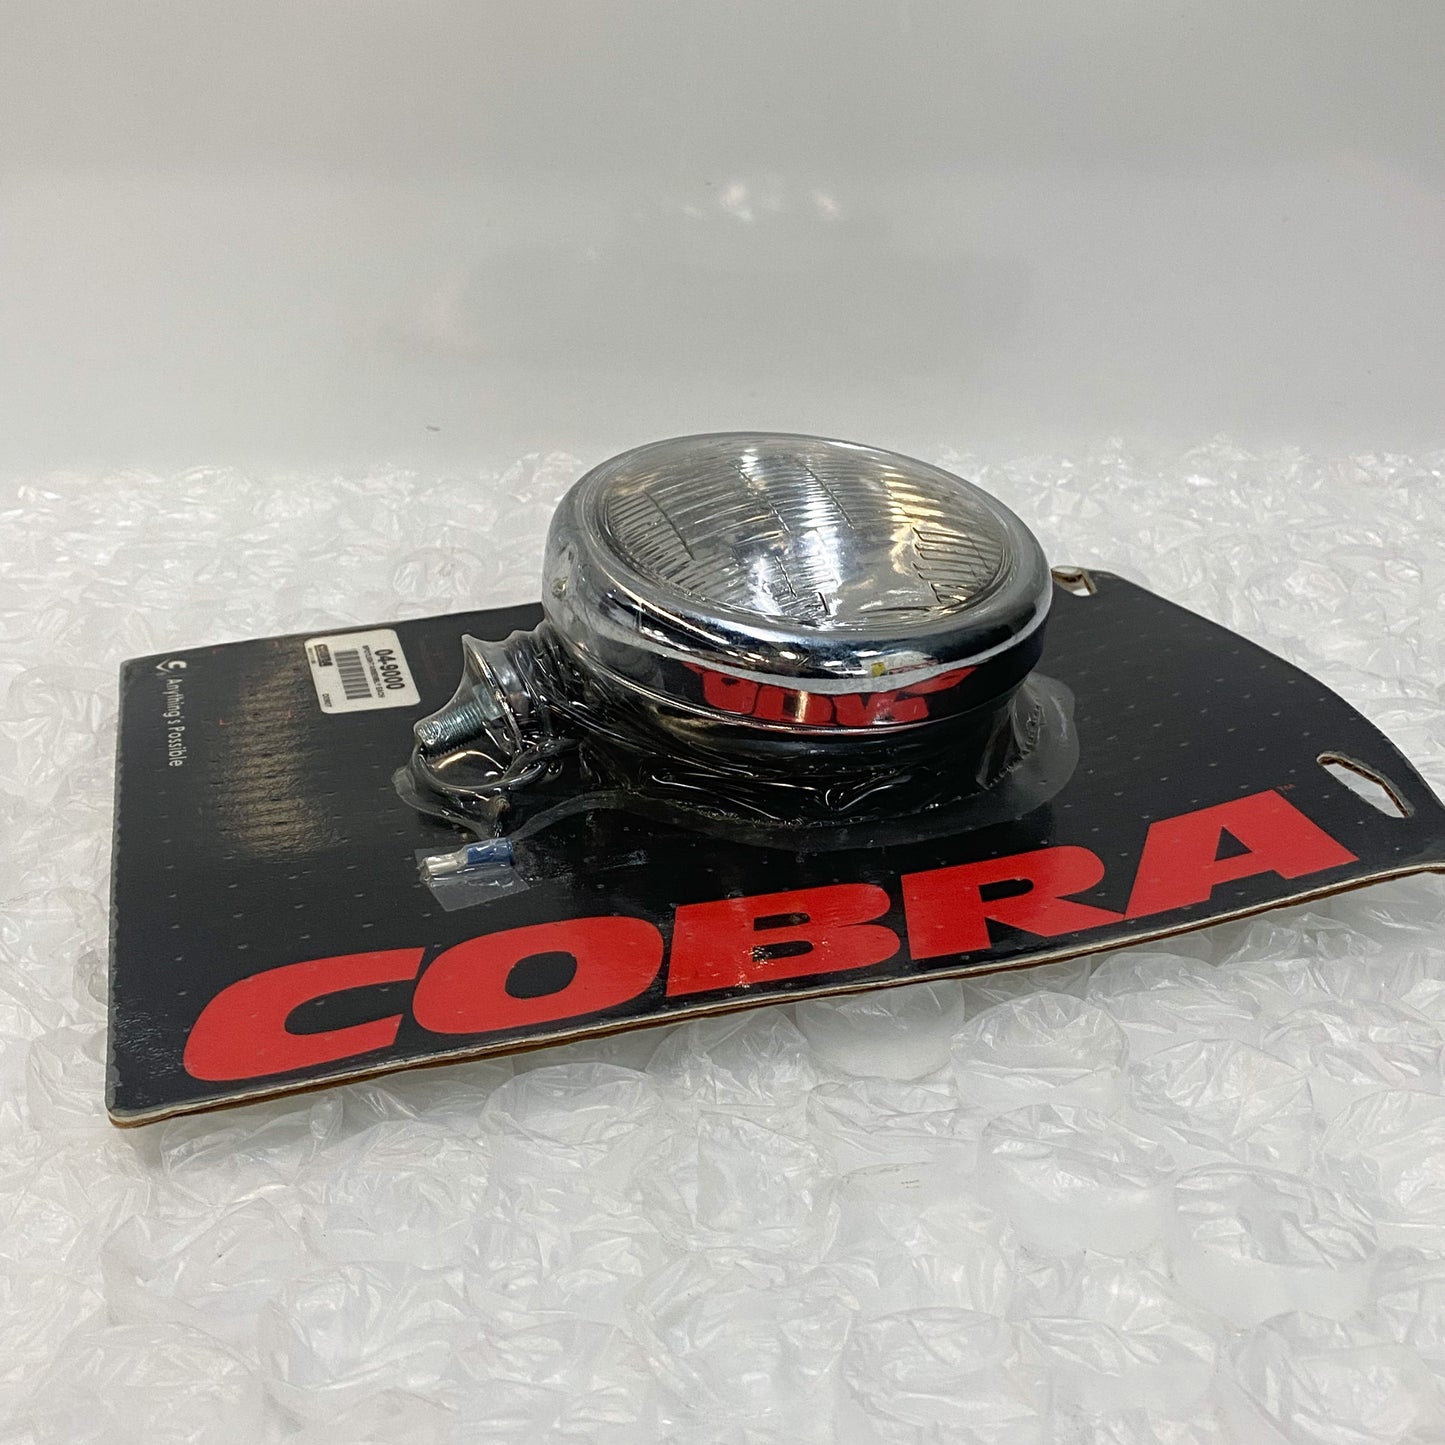 Cobra Spotlight Assembly 04-9000